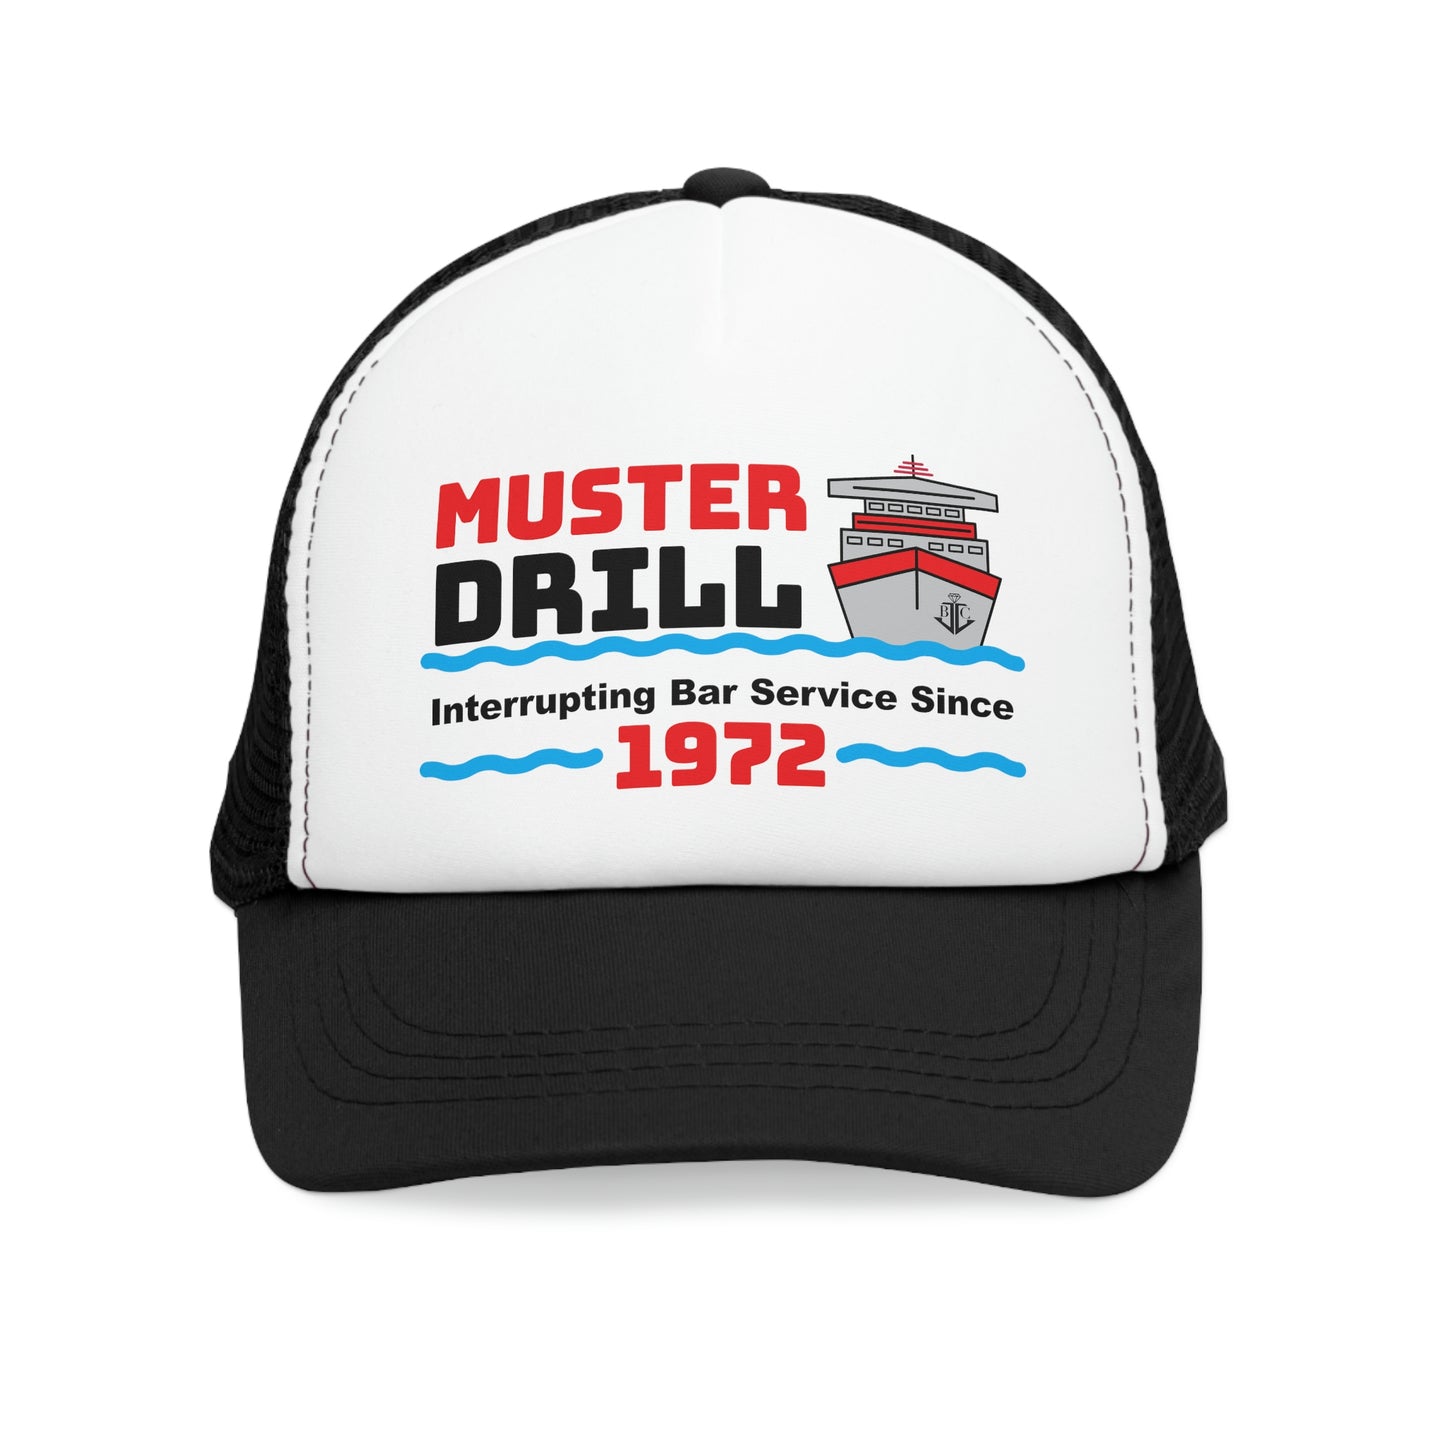 Muster Drill Interrupting Bar Service Since 1972–Mesh Cap